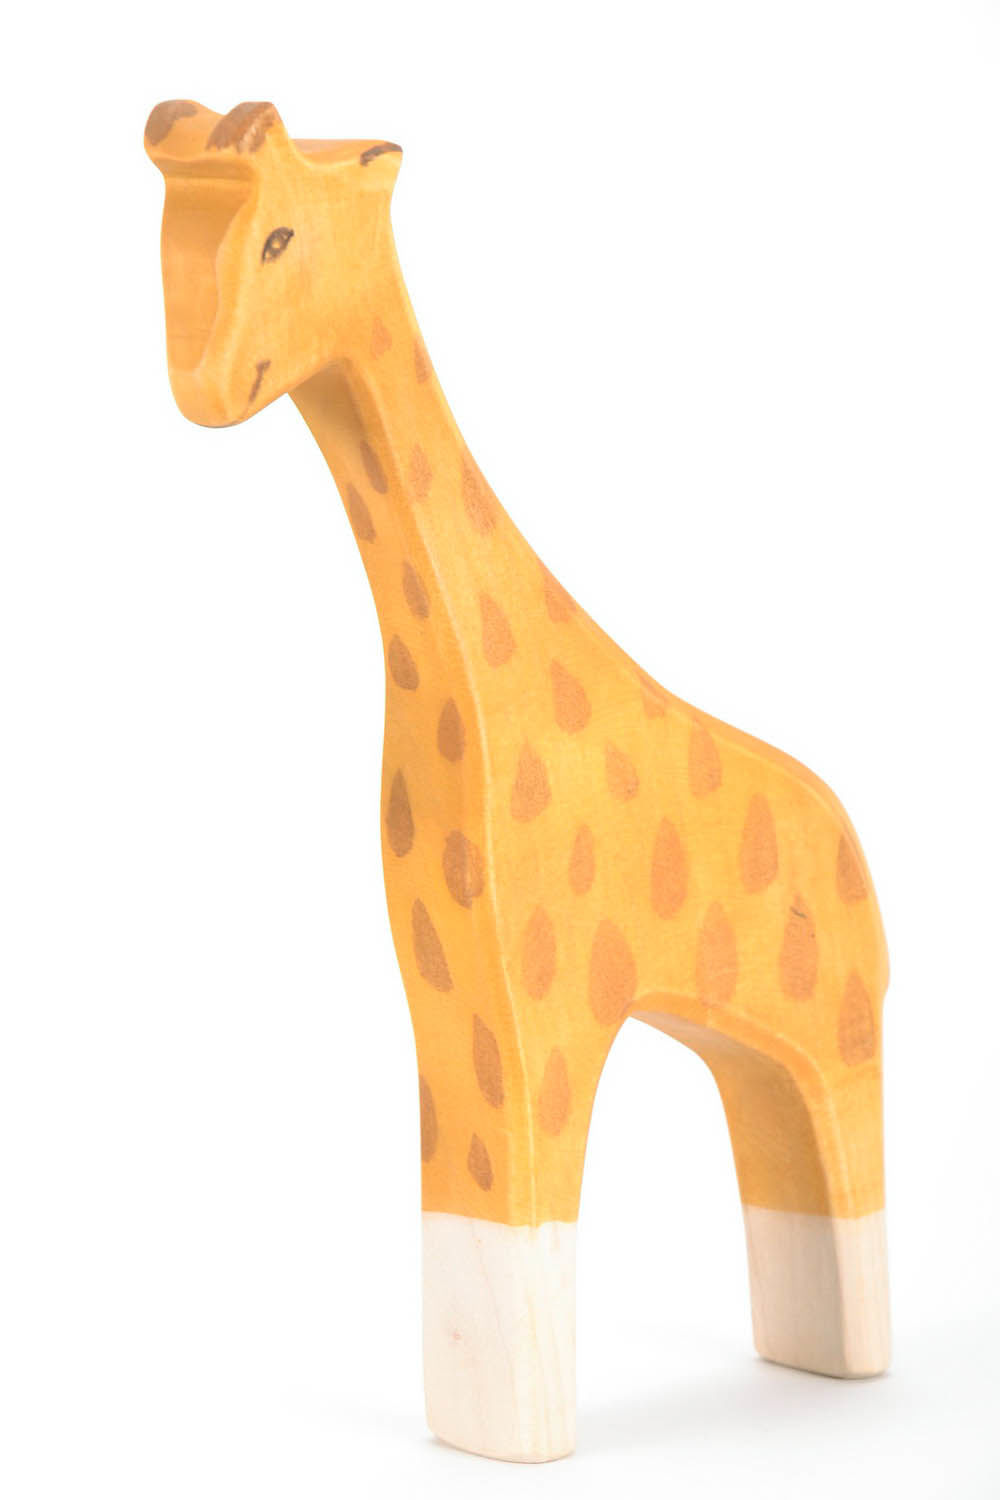 Jouet en bois d'érable artisanal Girafe  photo 3